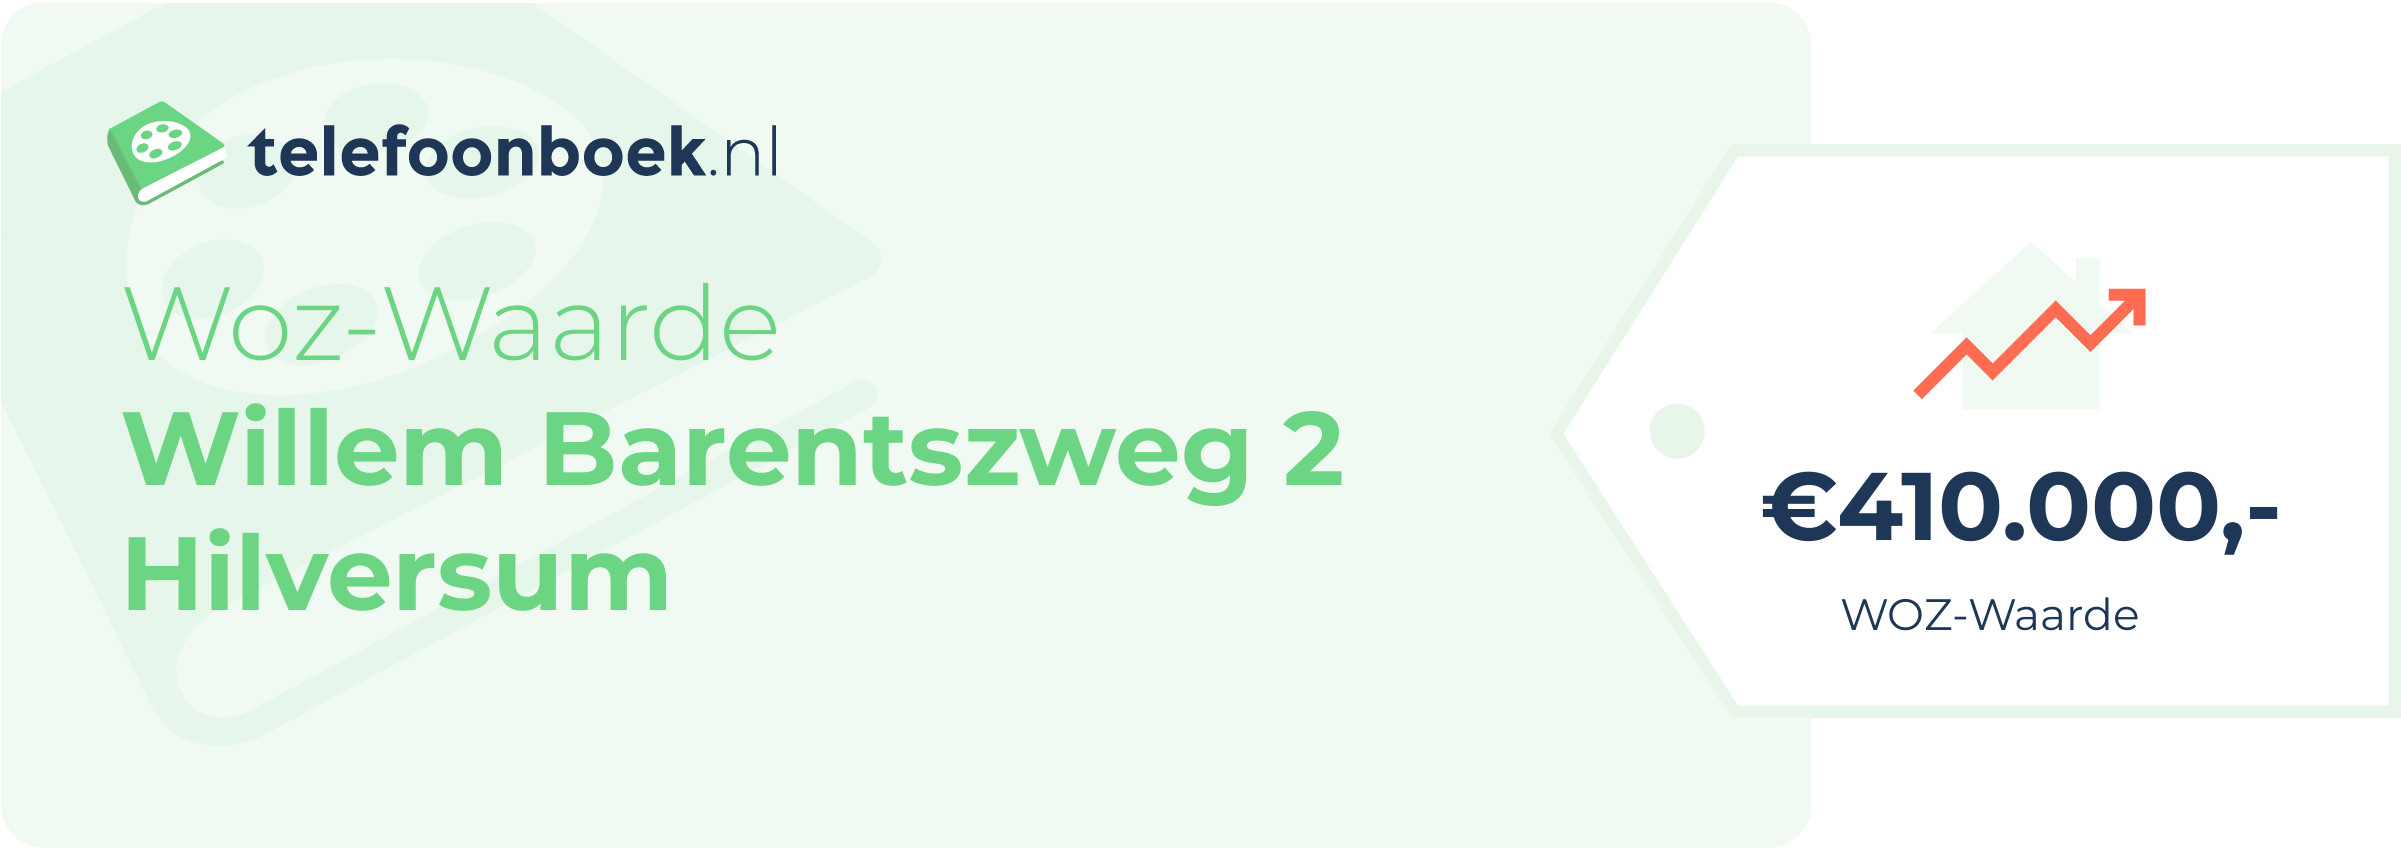 WOZ-waarde Willem Barentszweg 2 Hilversum